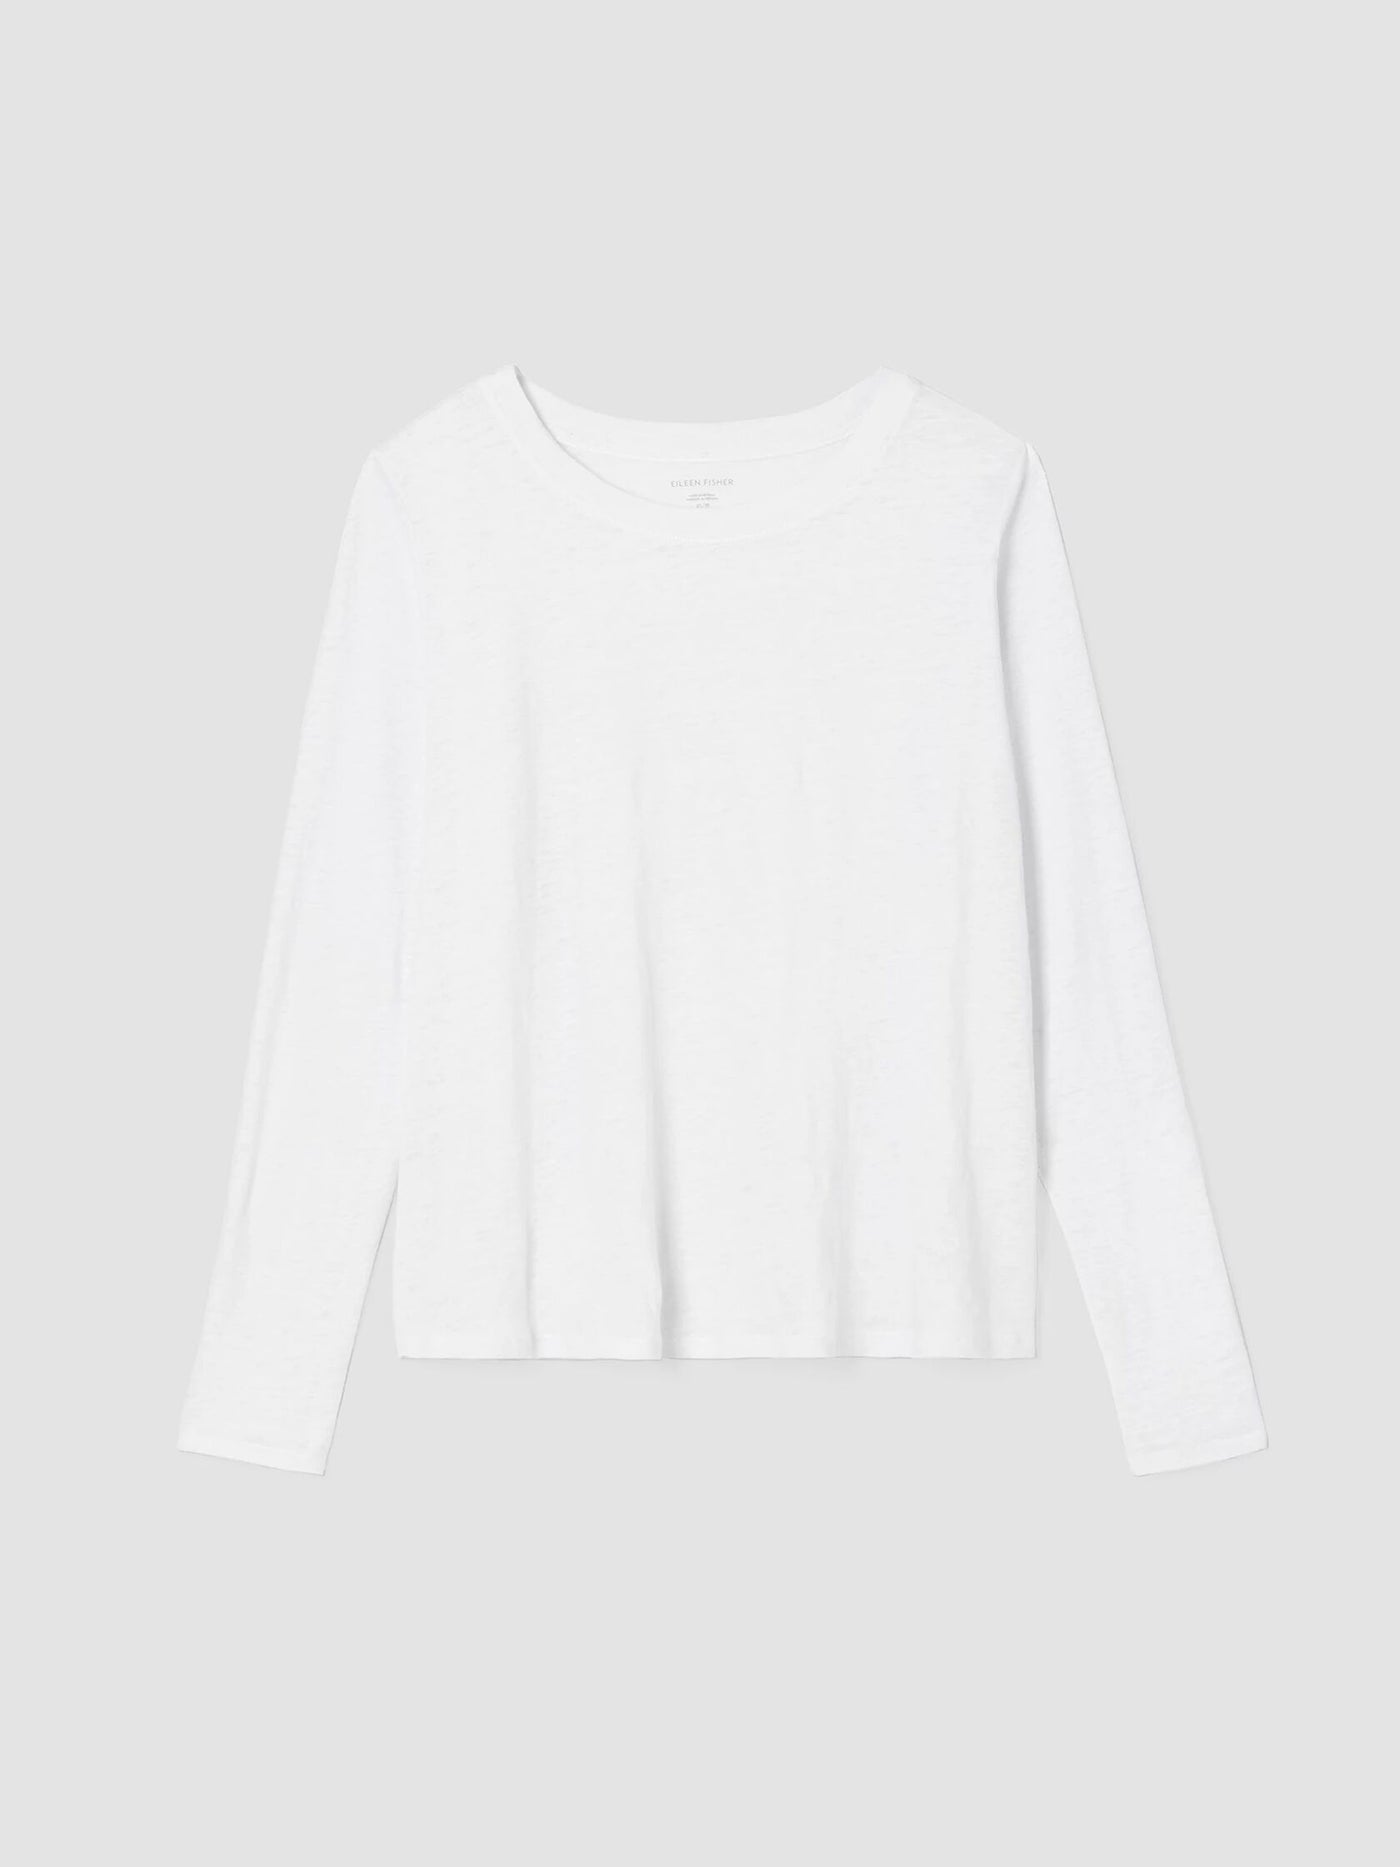 Eileen Fisher Linen Jersey Long Sleeve Crewneck T-shirt in White